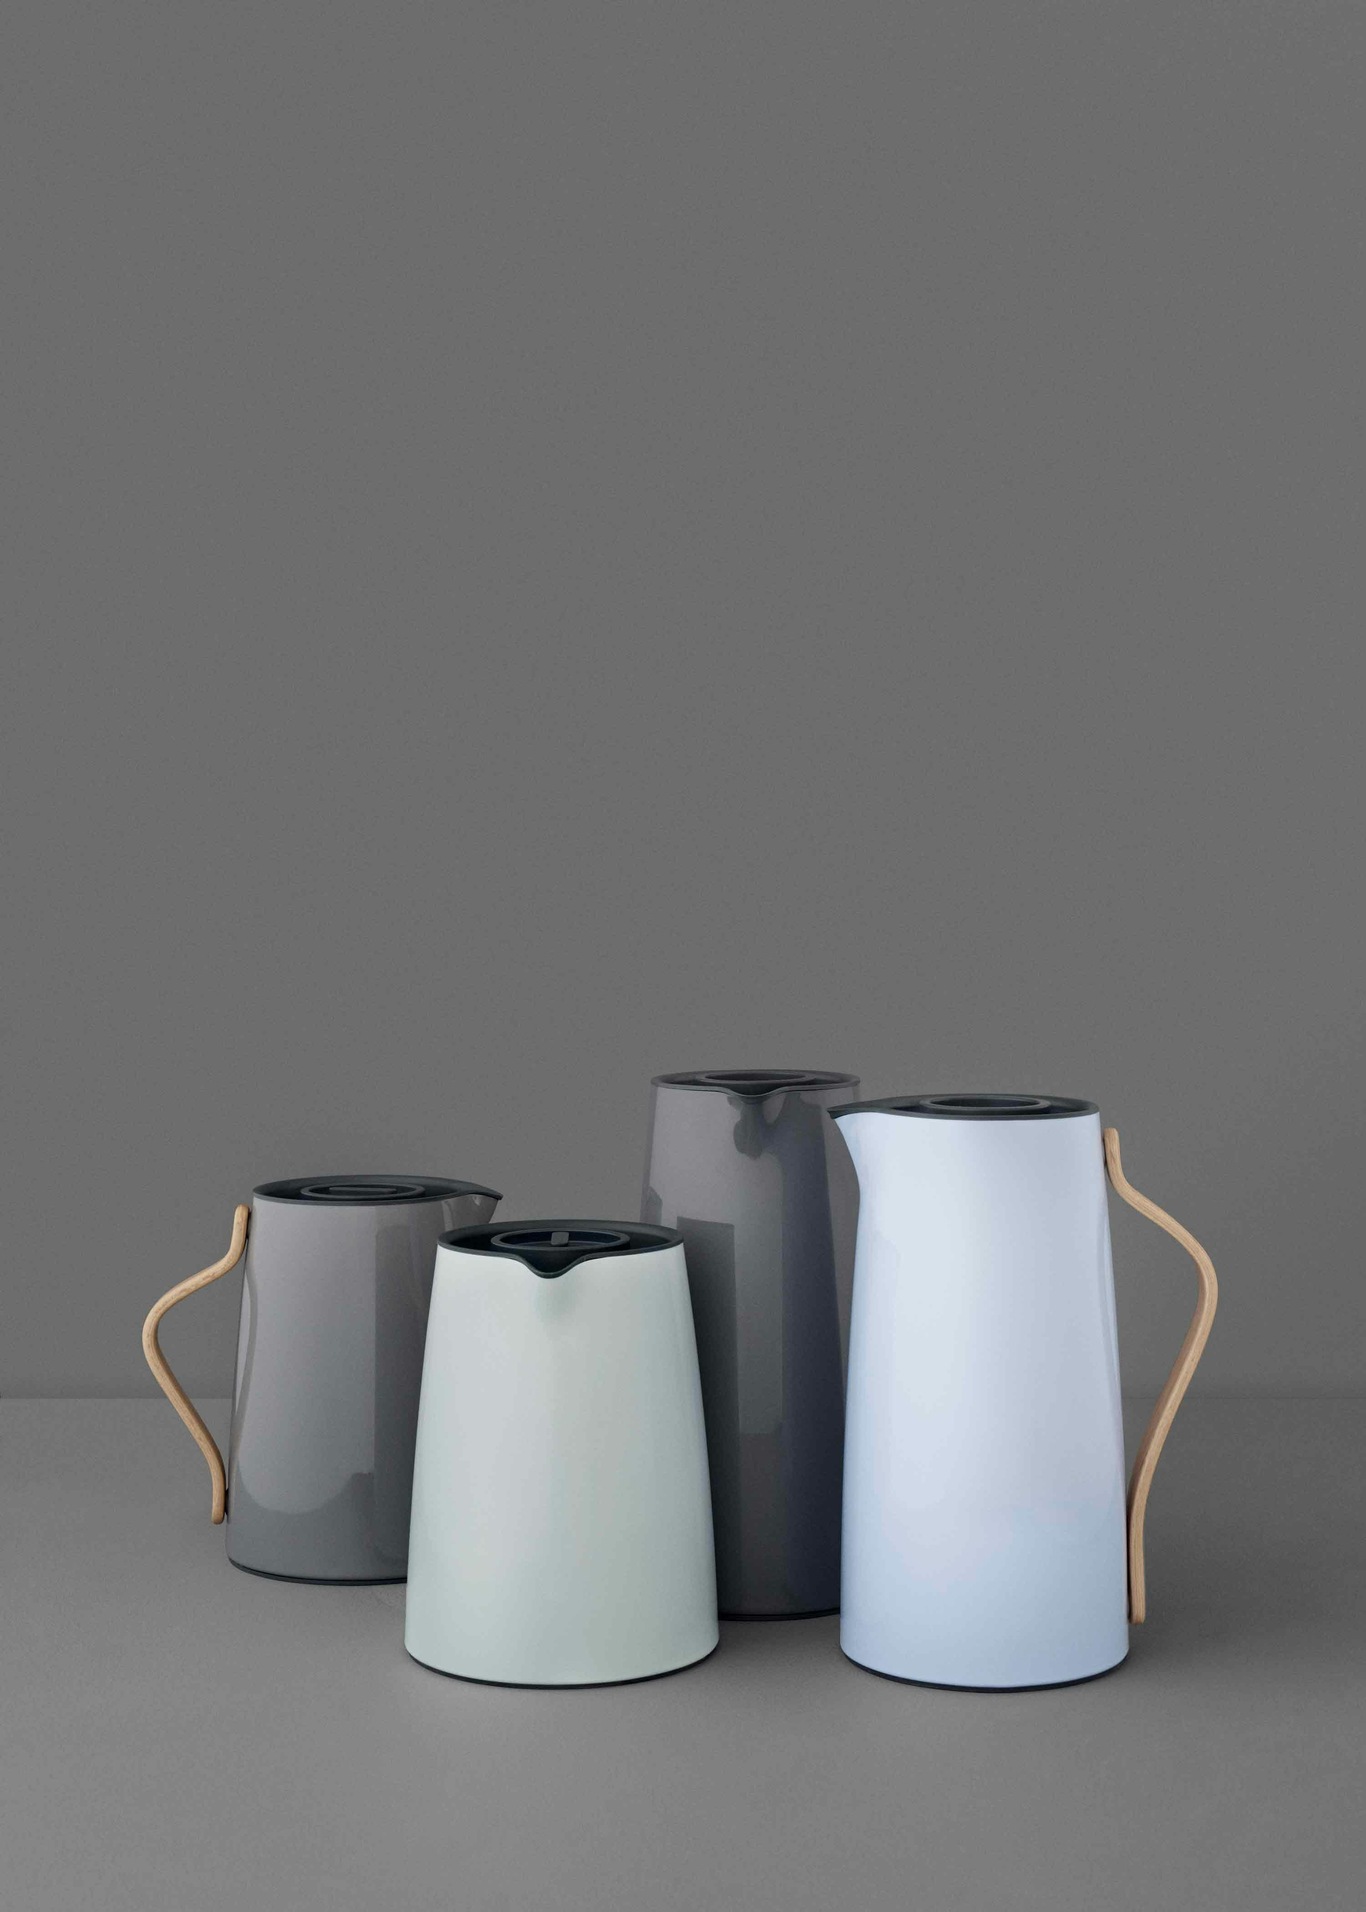 https://royaldesign.com/image/2/stelton-emma-coffee-vacuum-jug-12-l-2?w=800&quality=80